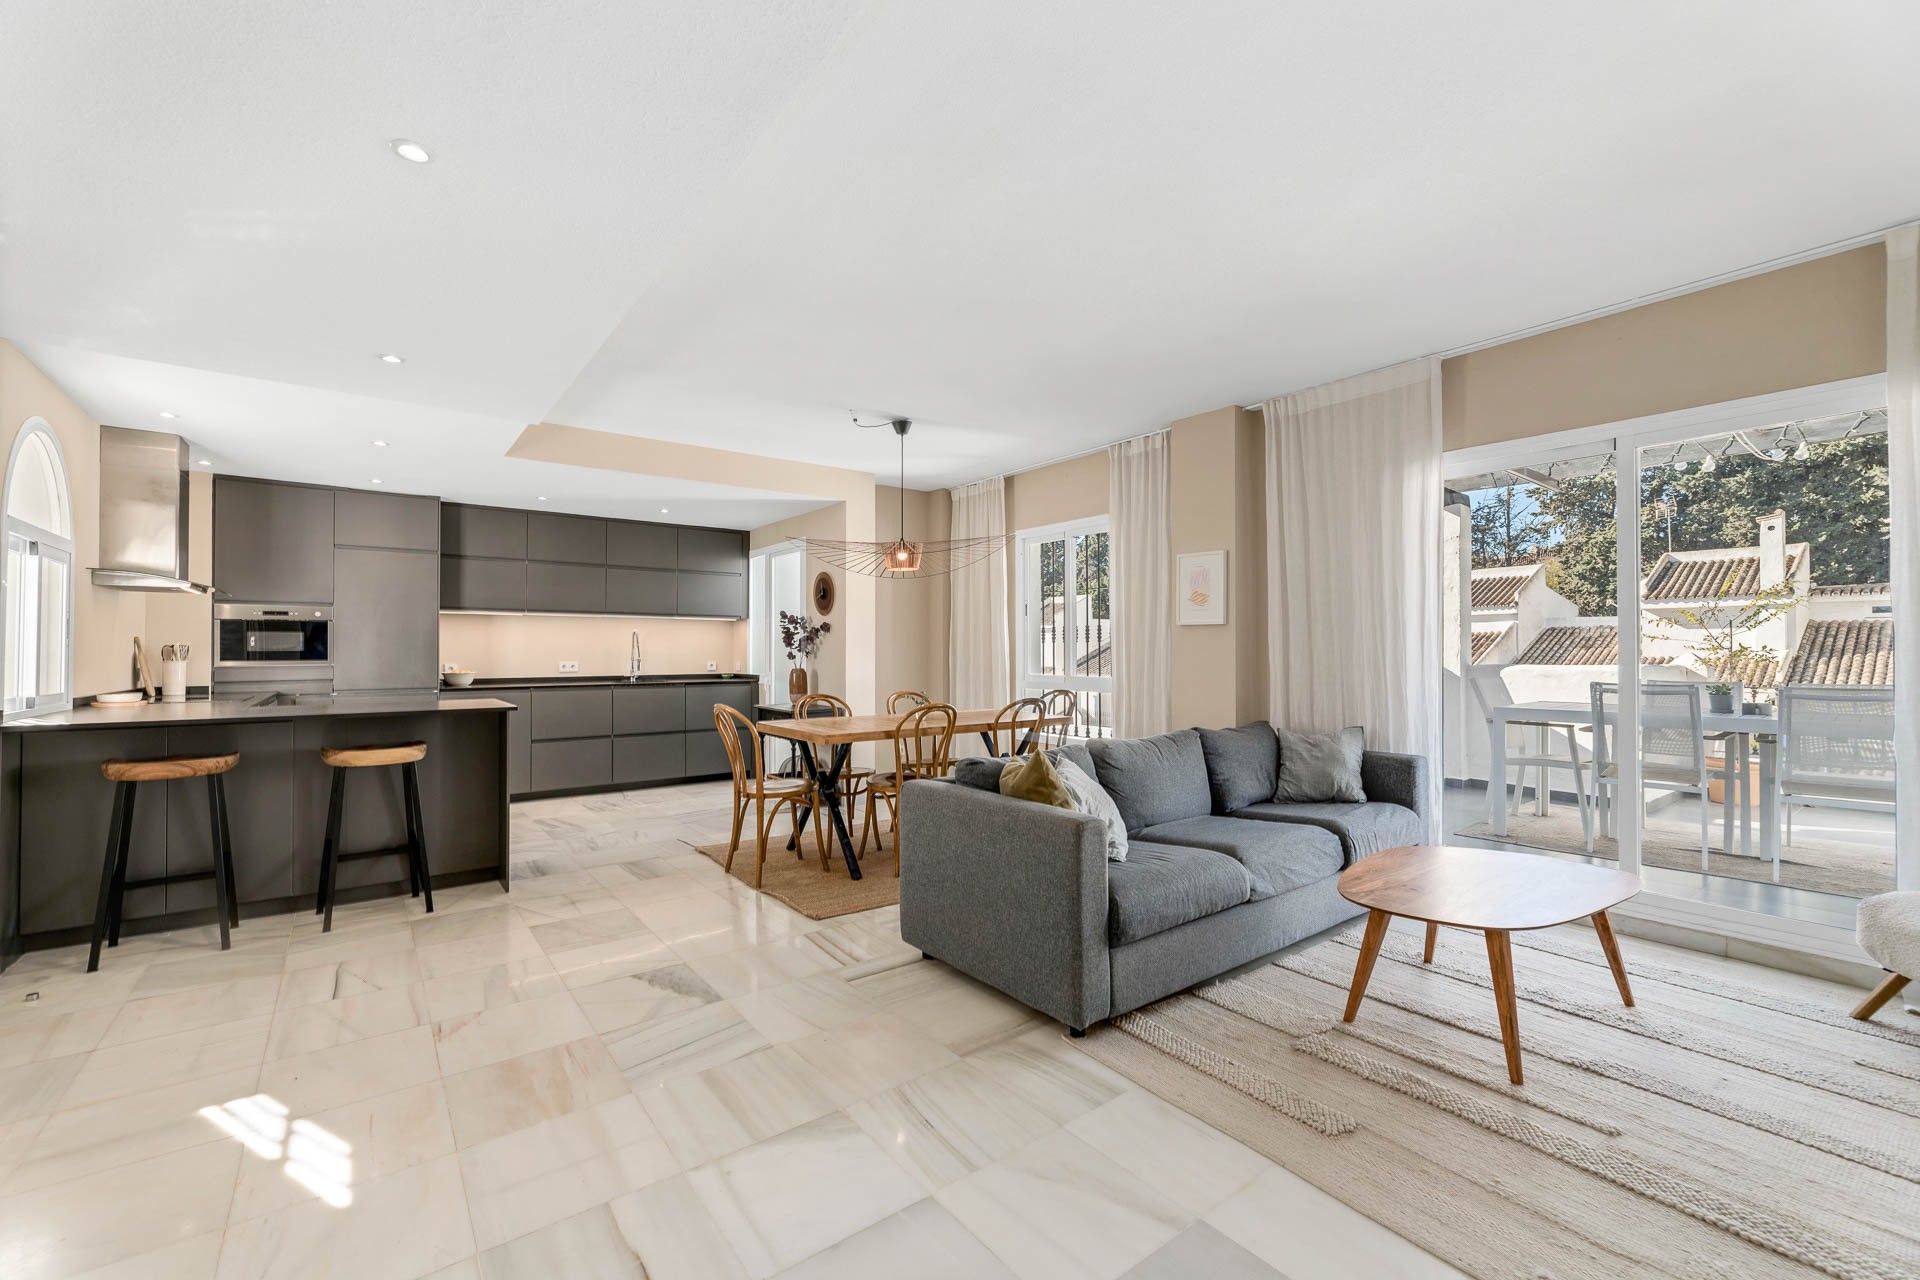 Nueva Andalucía: Exquisite 3-Bedroom Penthouse Duplex in prime location | Engel & Völkers Marbella